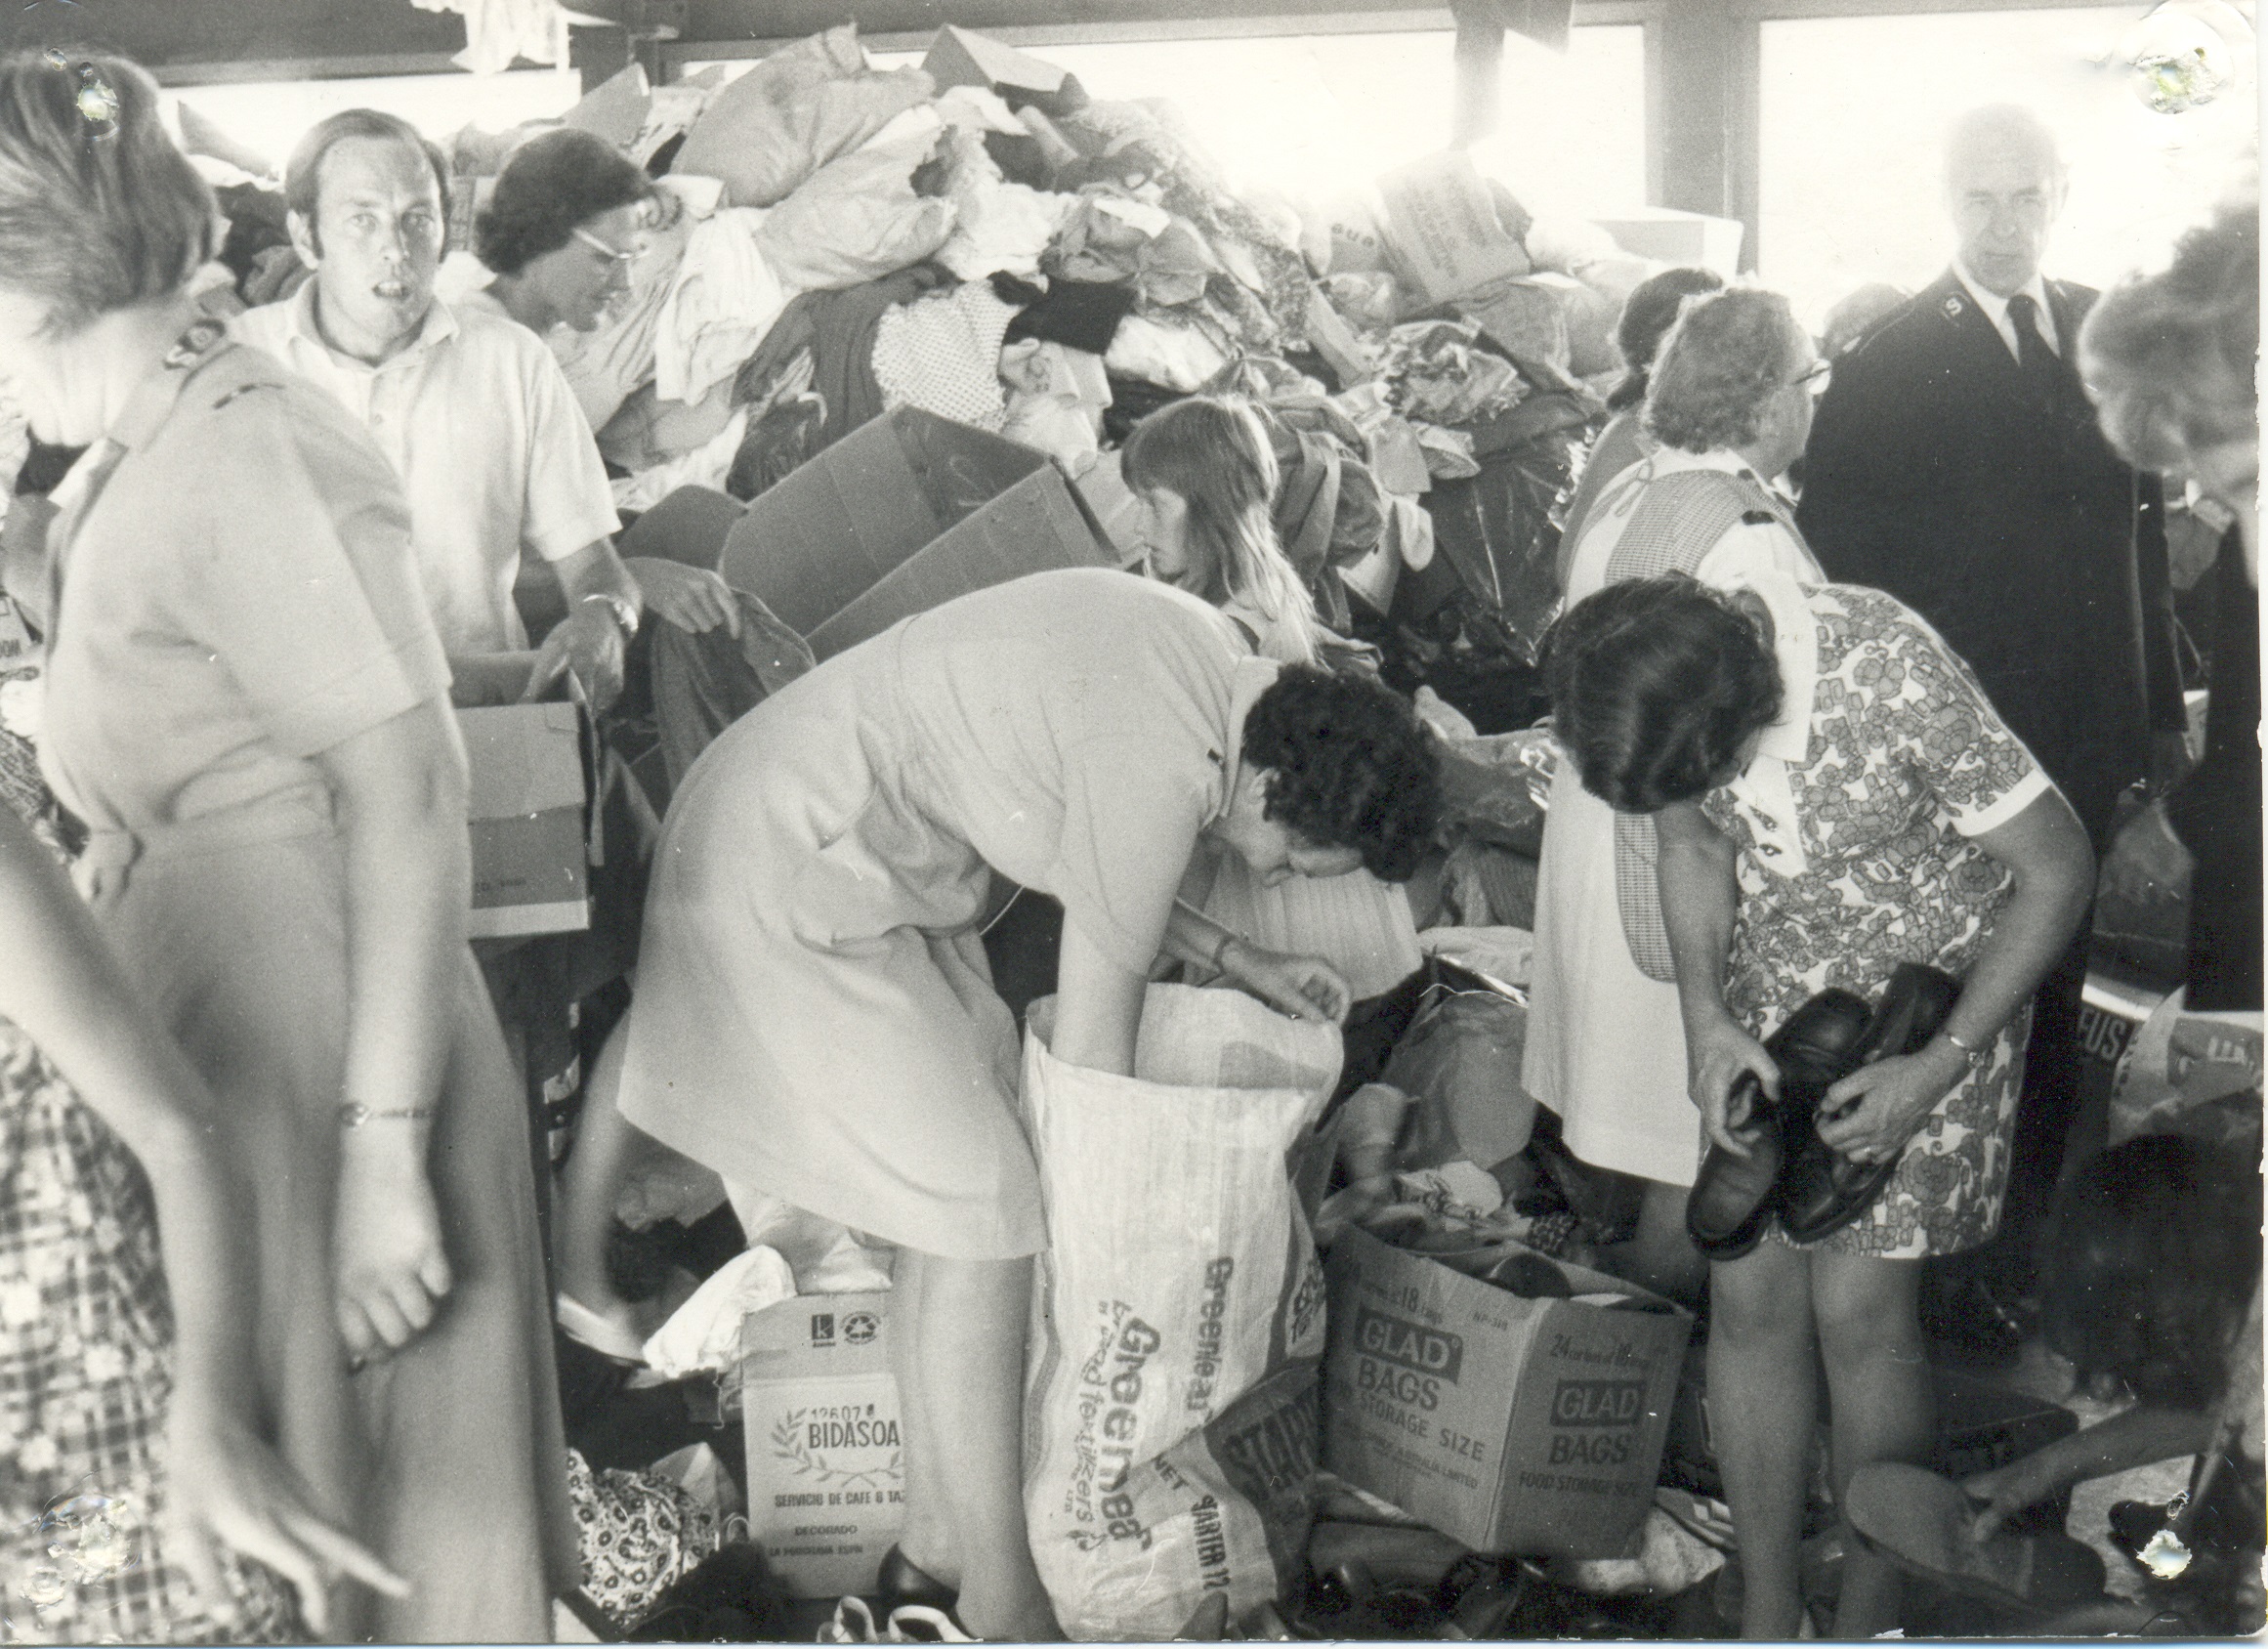 Old image of Salvos distributing supplies